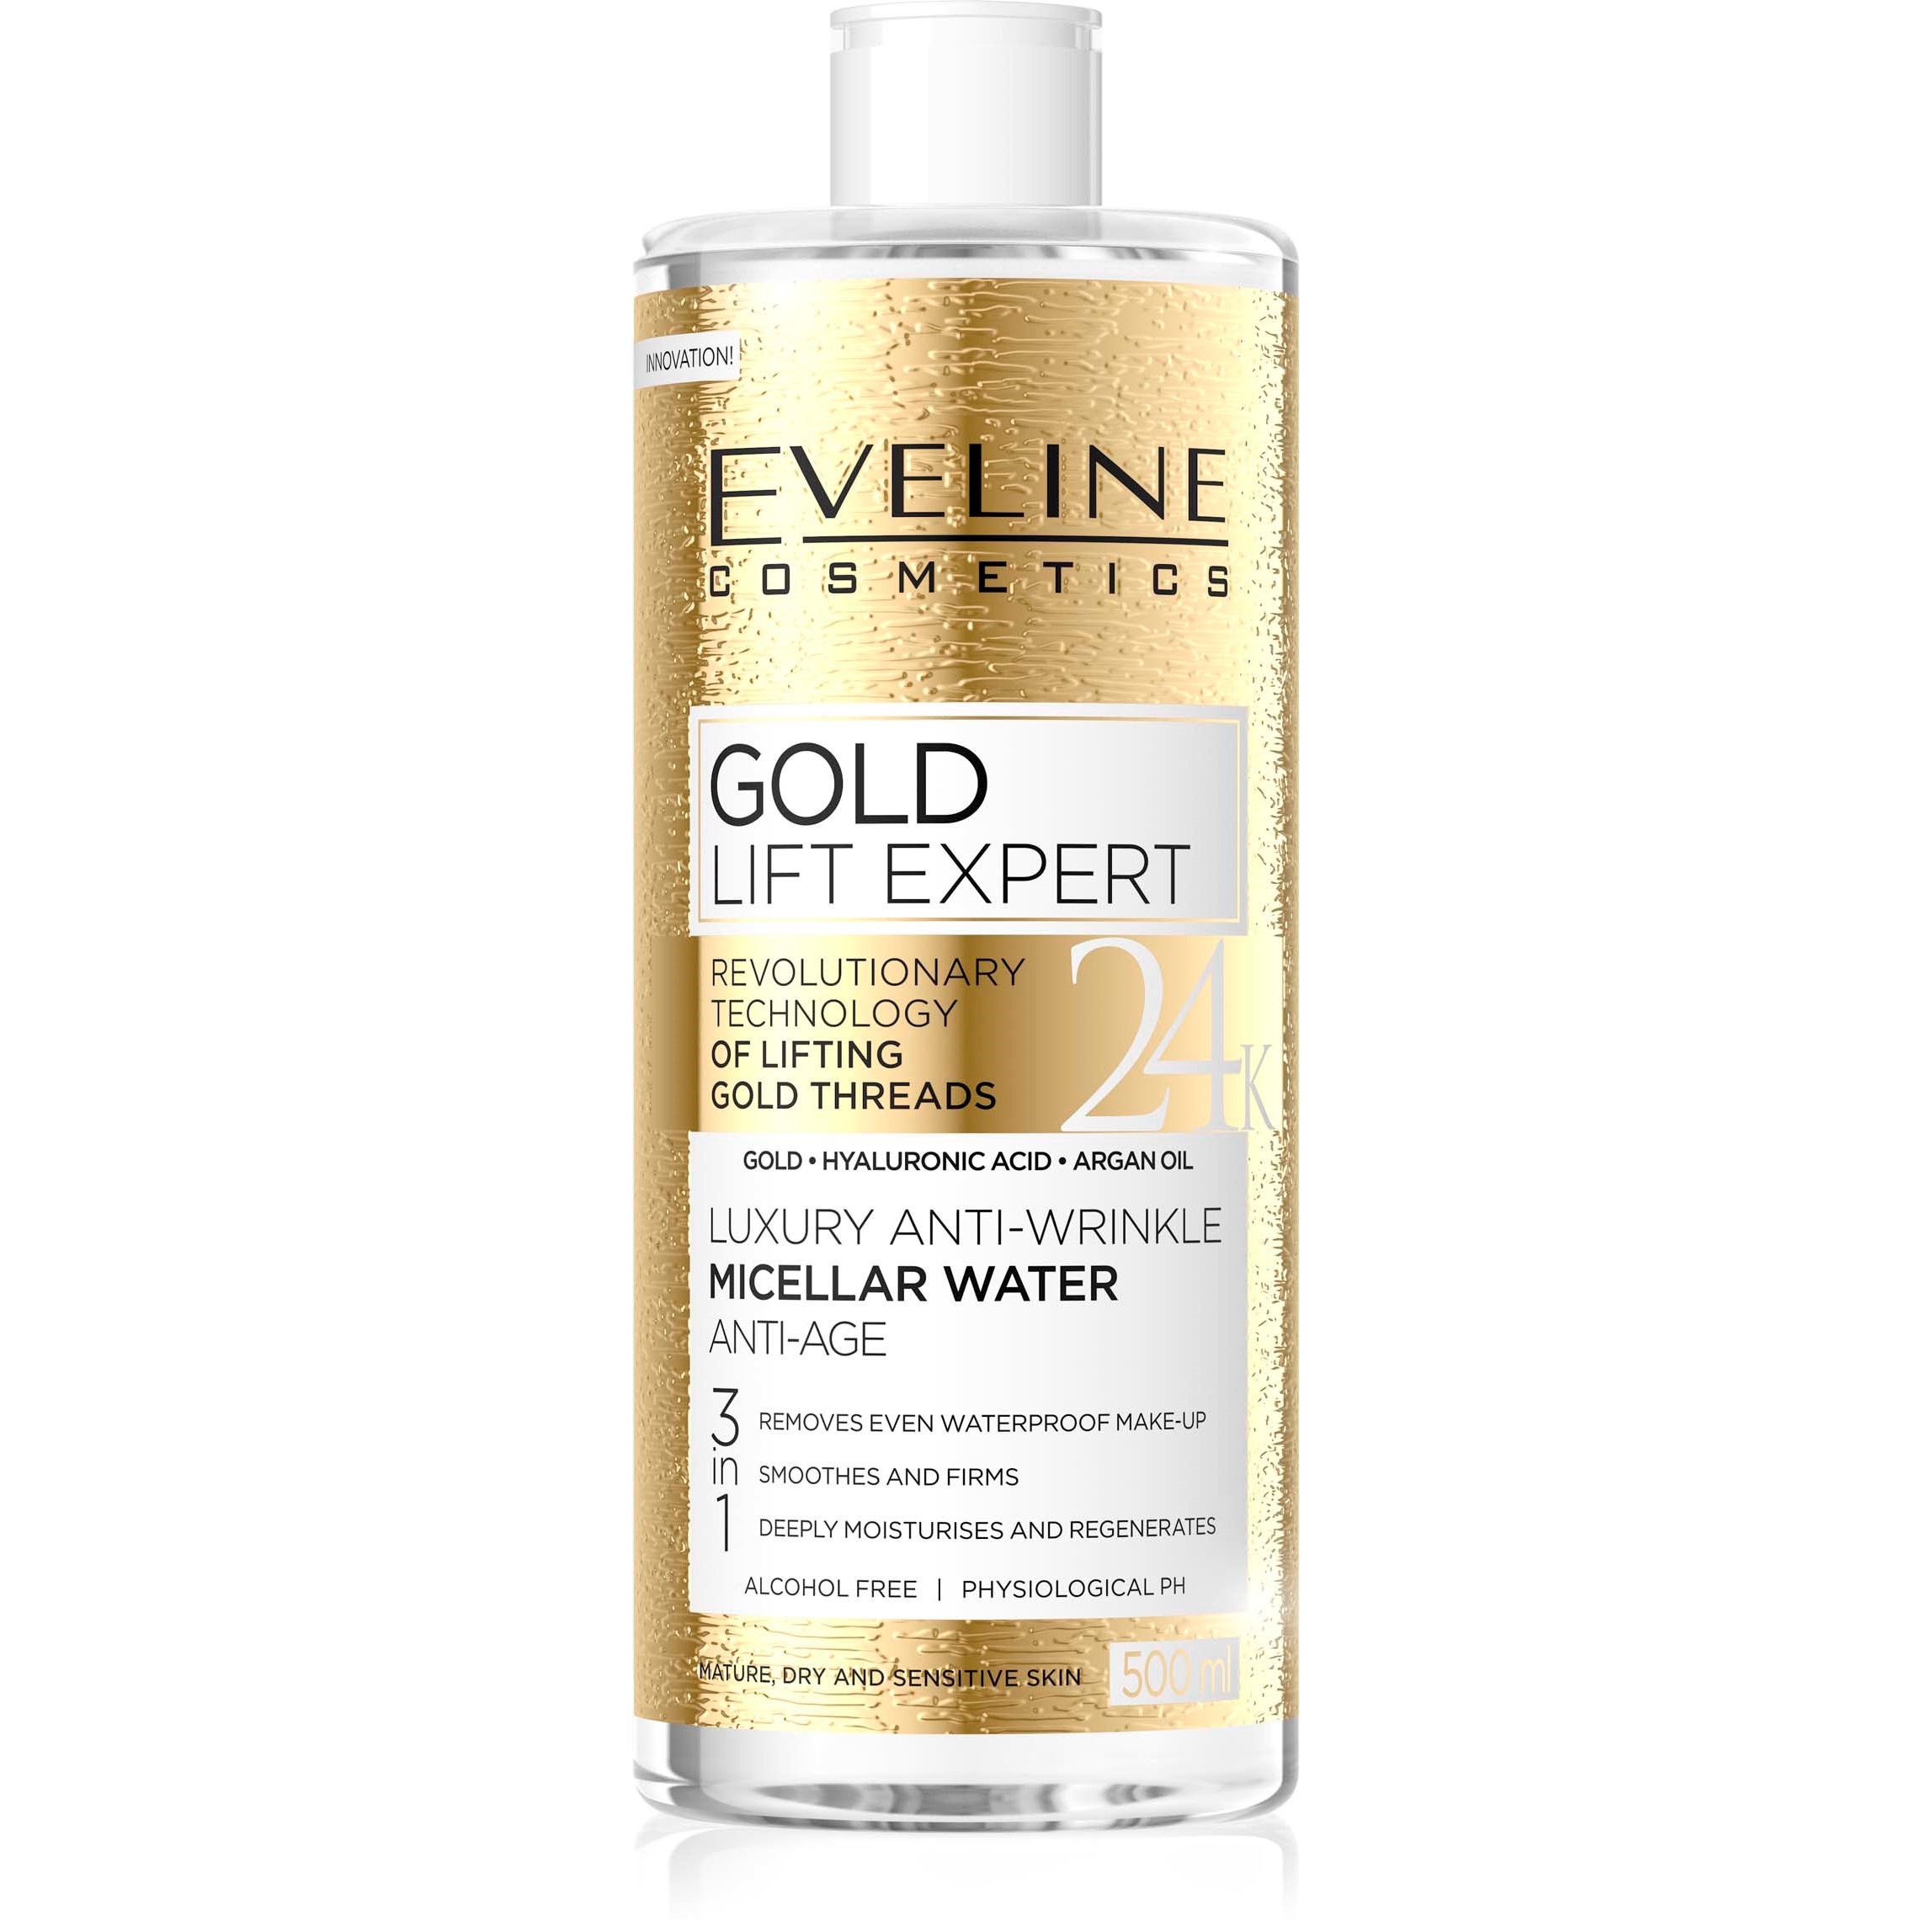 Bilde av Eveline Cosmetics Gold Lift Expert Luxury Anti-wrinkle Micellar Water